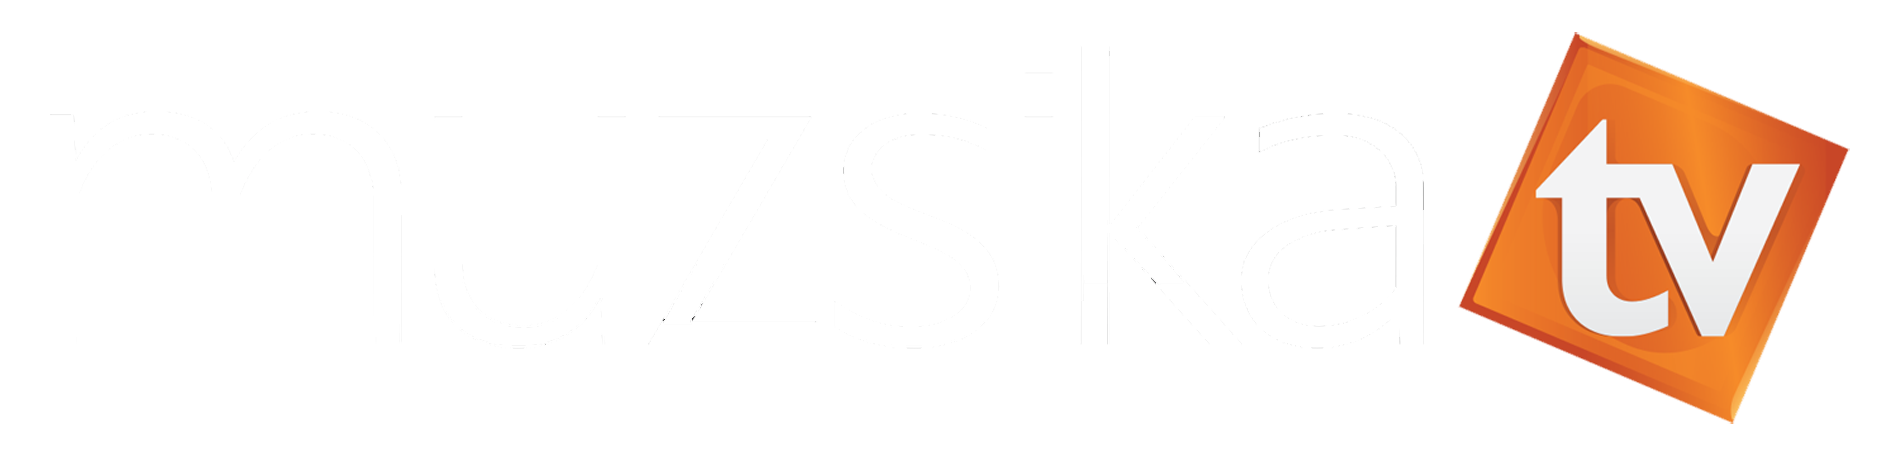 https://rtl.hu/images/muzsika-tv-logo.png